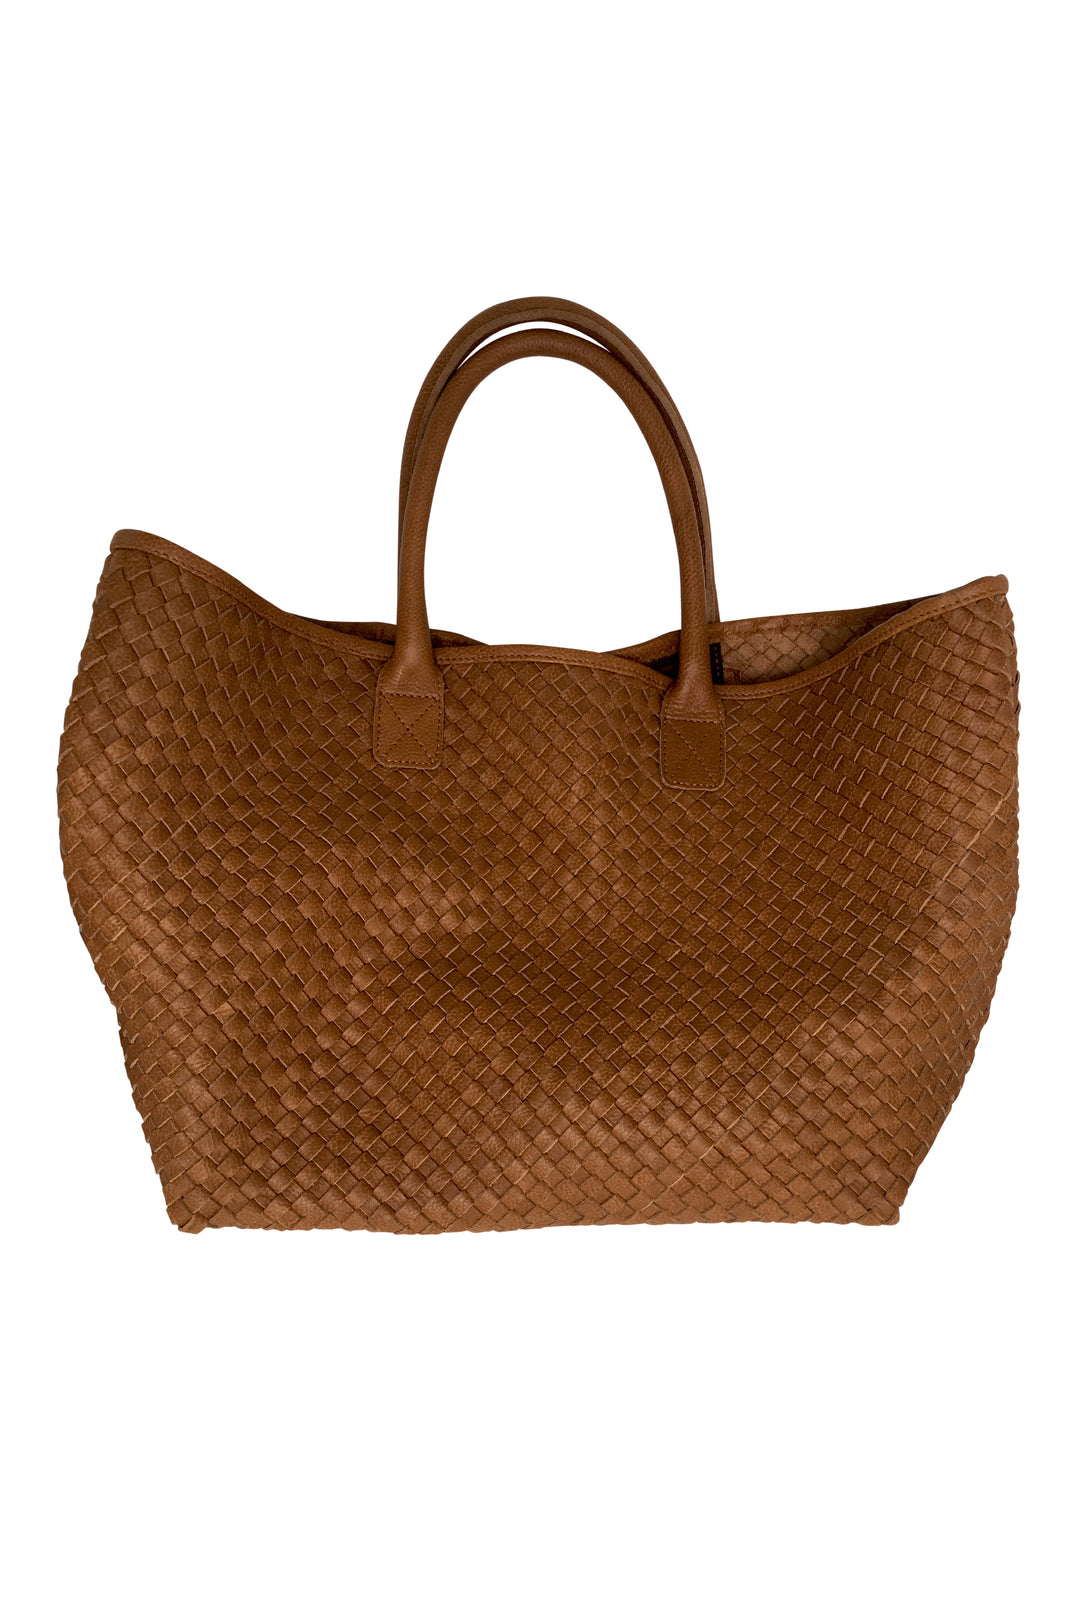 woven leather tote basket bag tan caramel